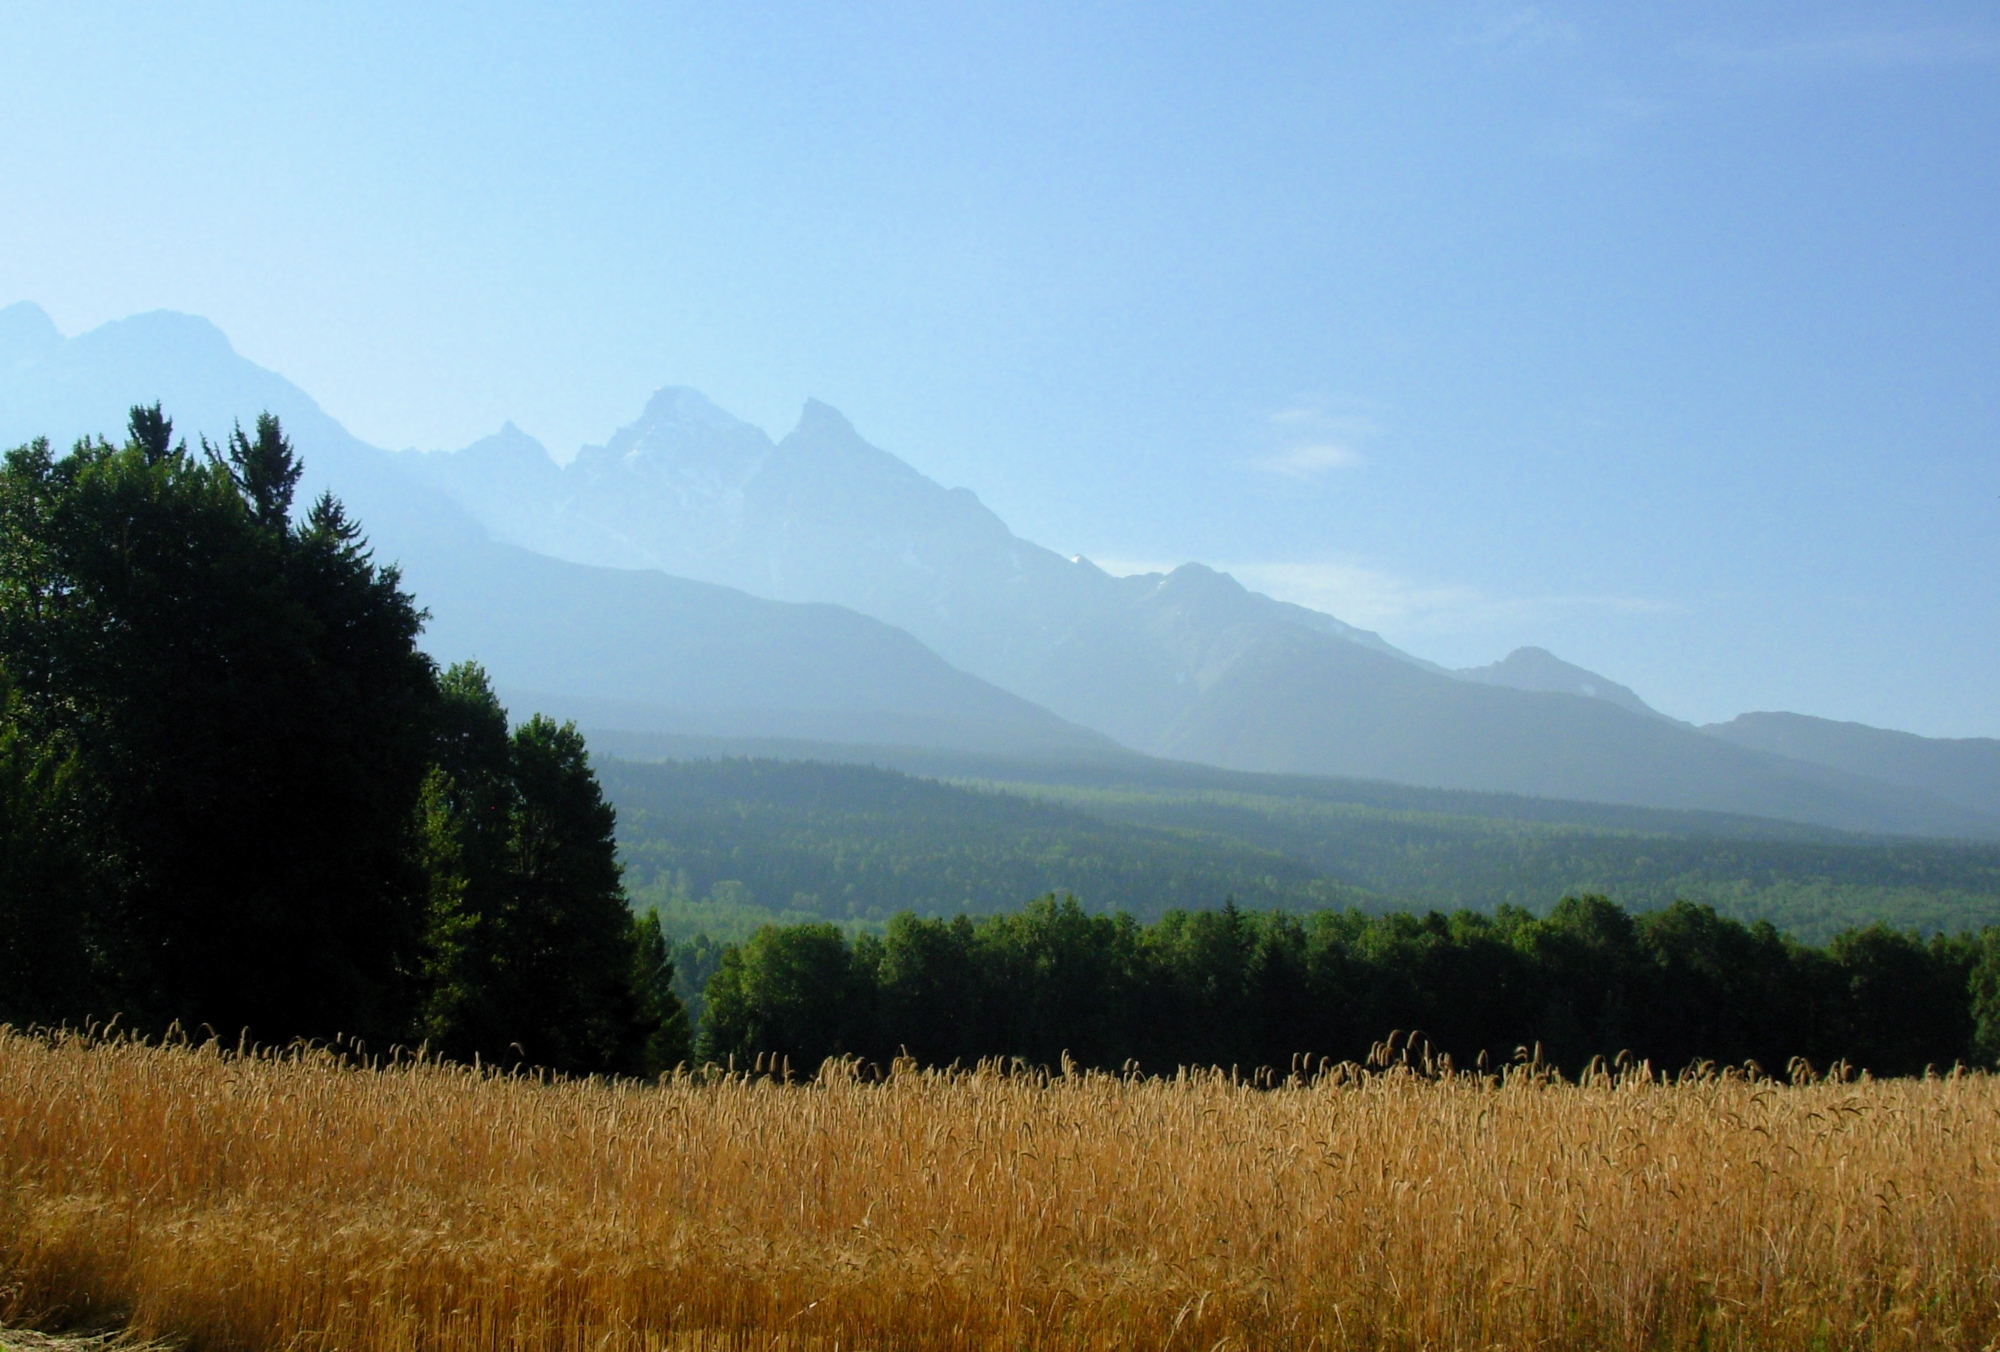 I came here to write: farm field, mountains